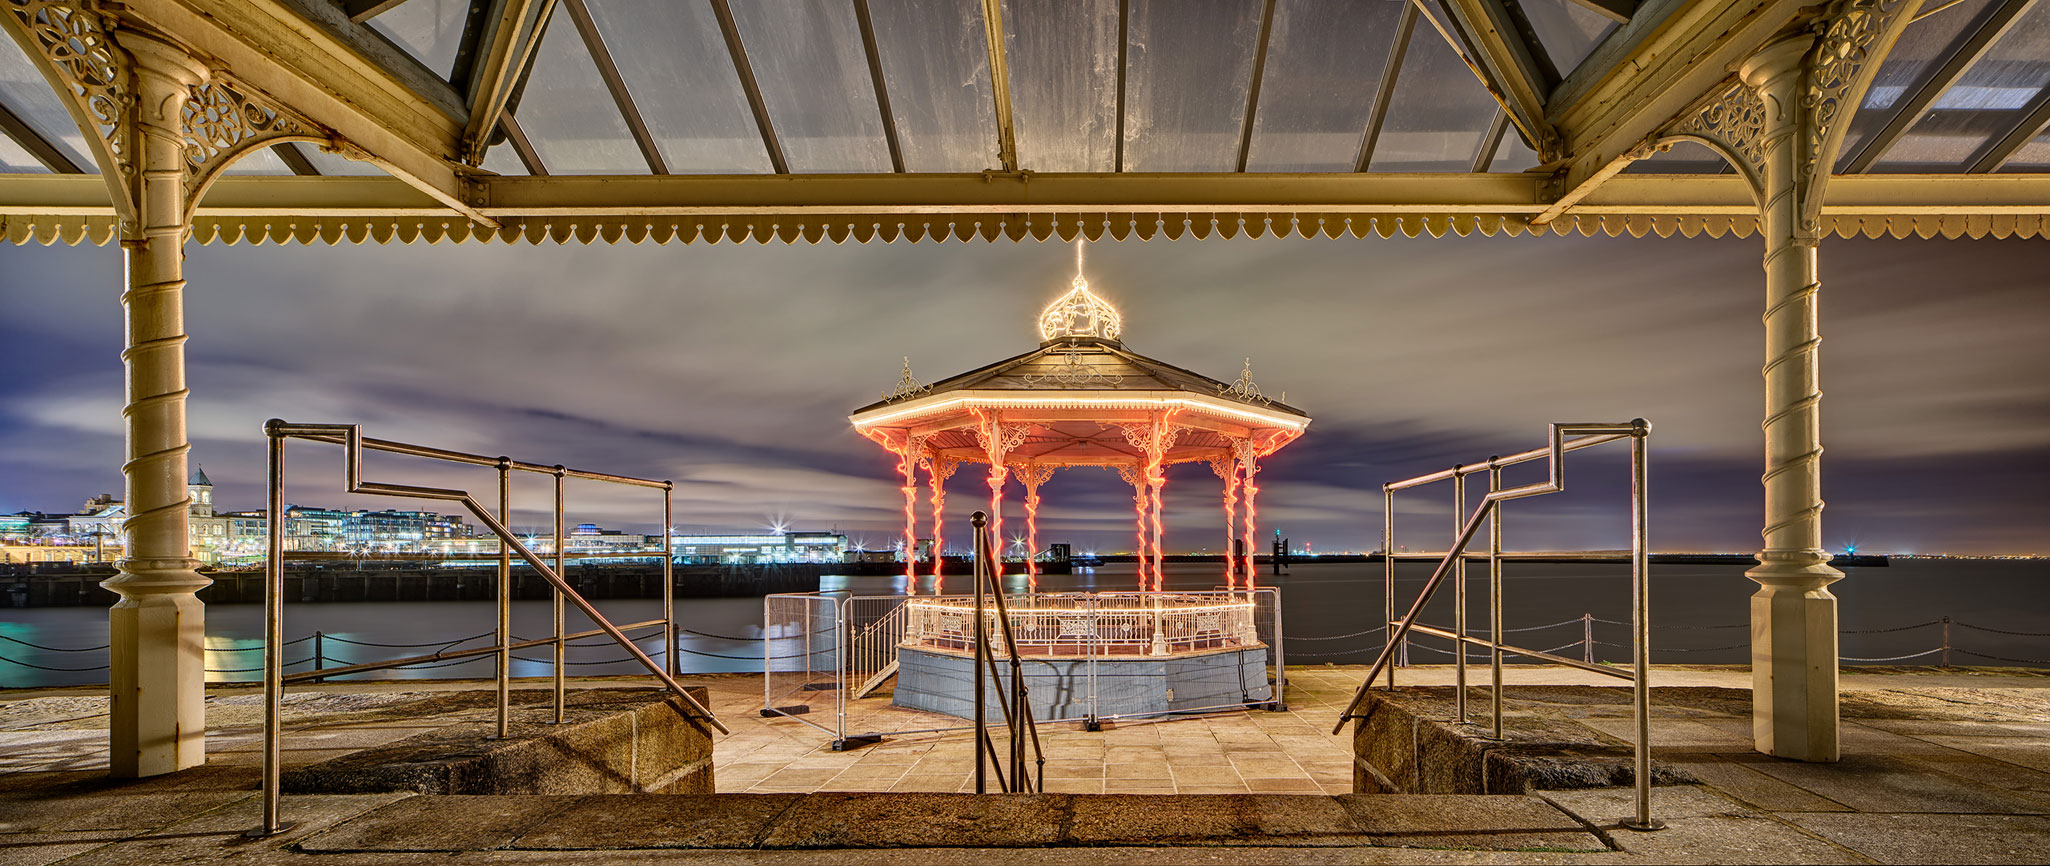 Dun Laoghaire Pier Bandstand